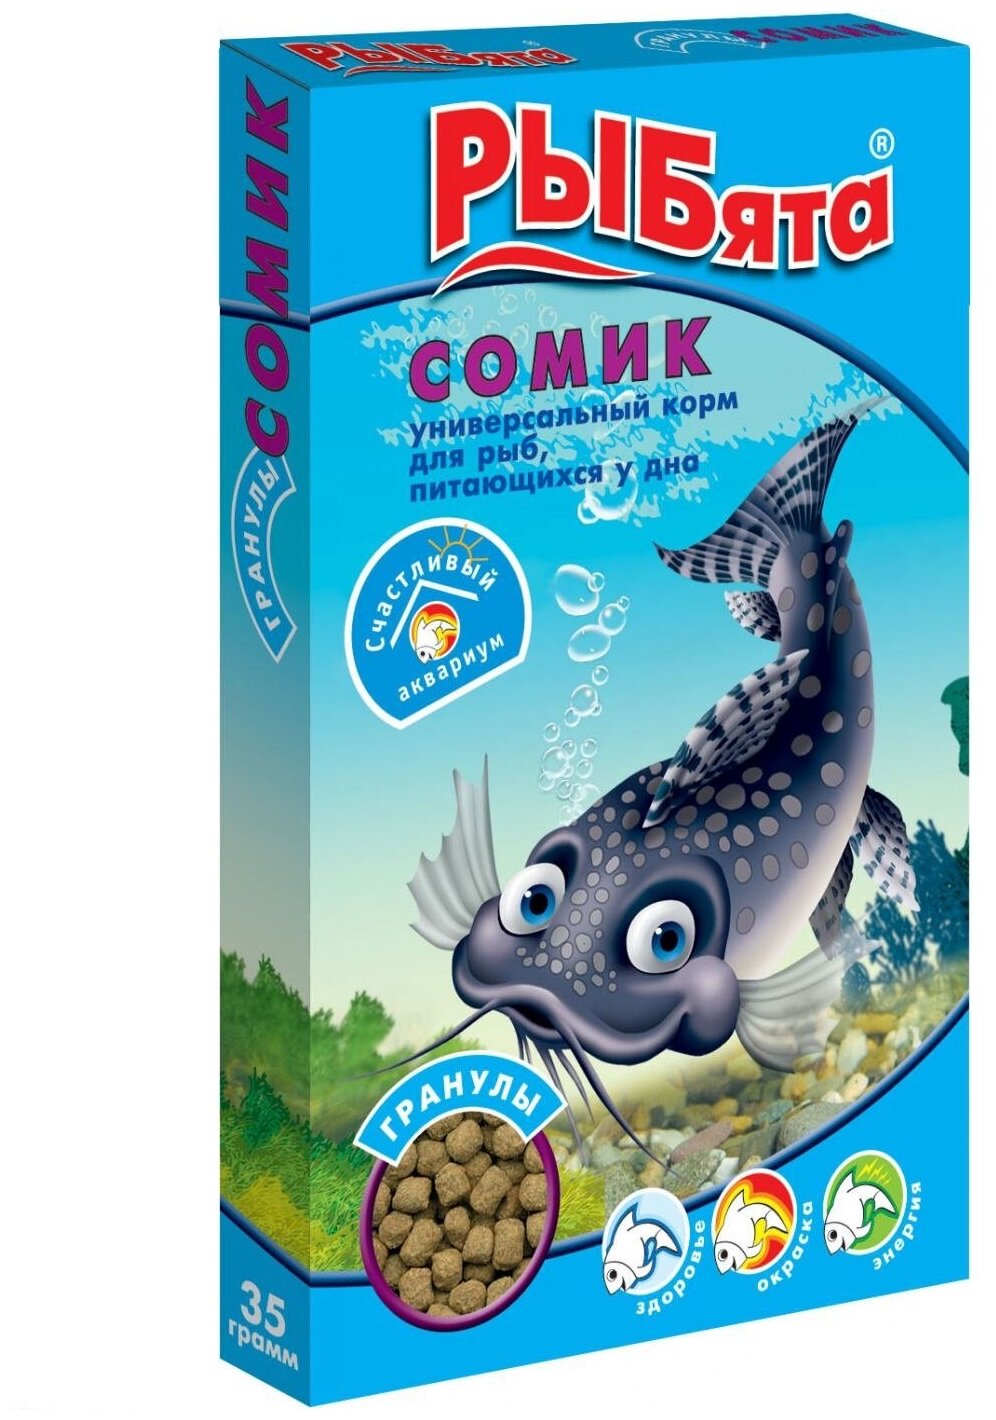 Зоомир РЫБята "сомик гранулы" корм для рыб, питающихся у дна,35г